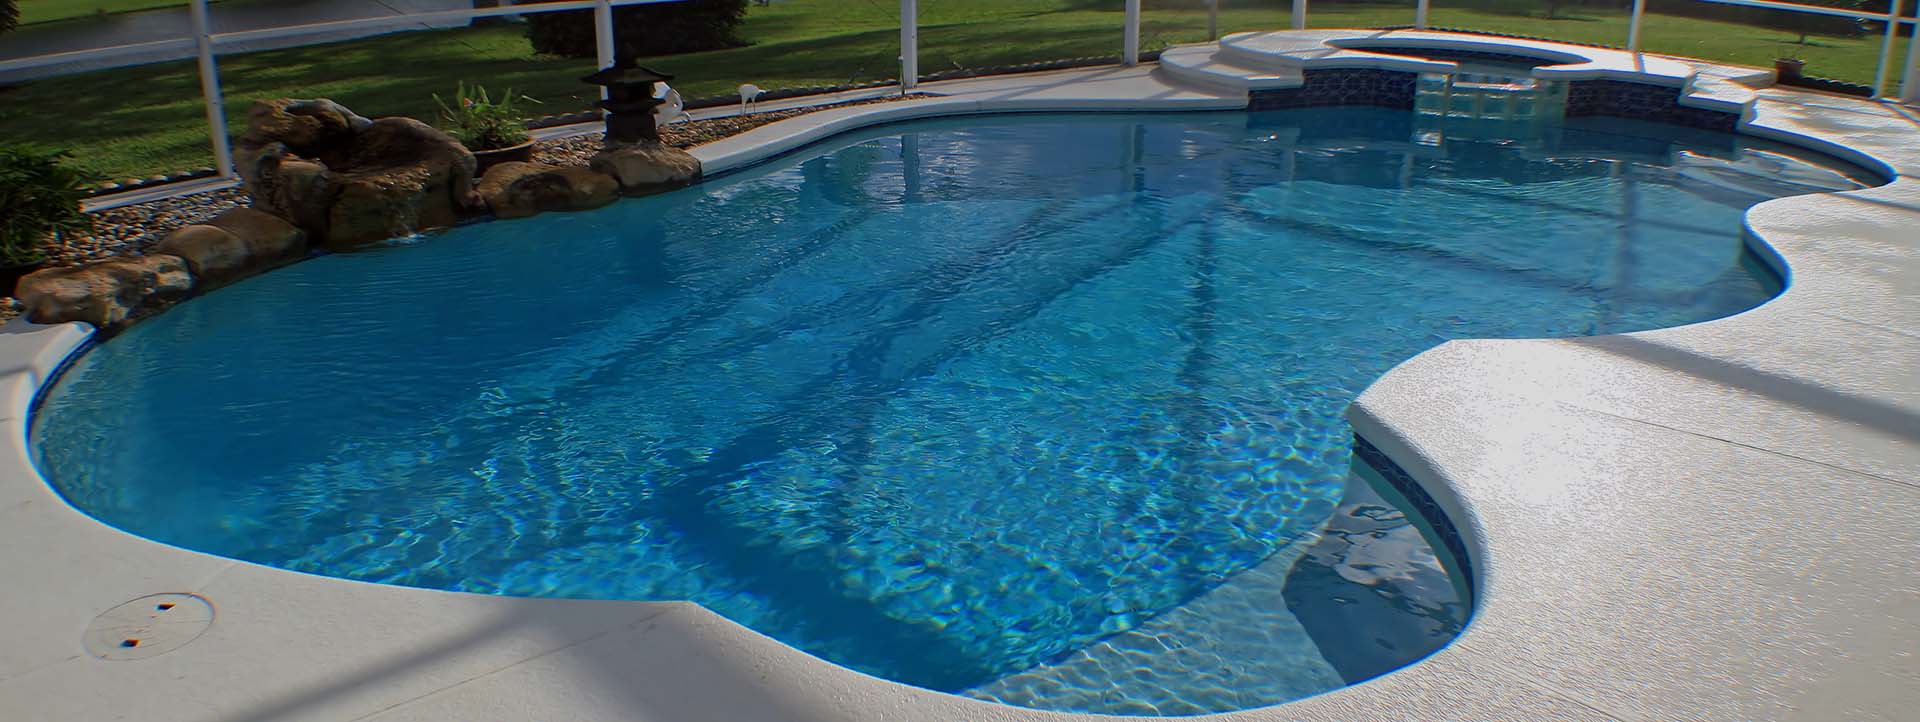 Clean Florida Residential Swimming Pool